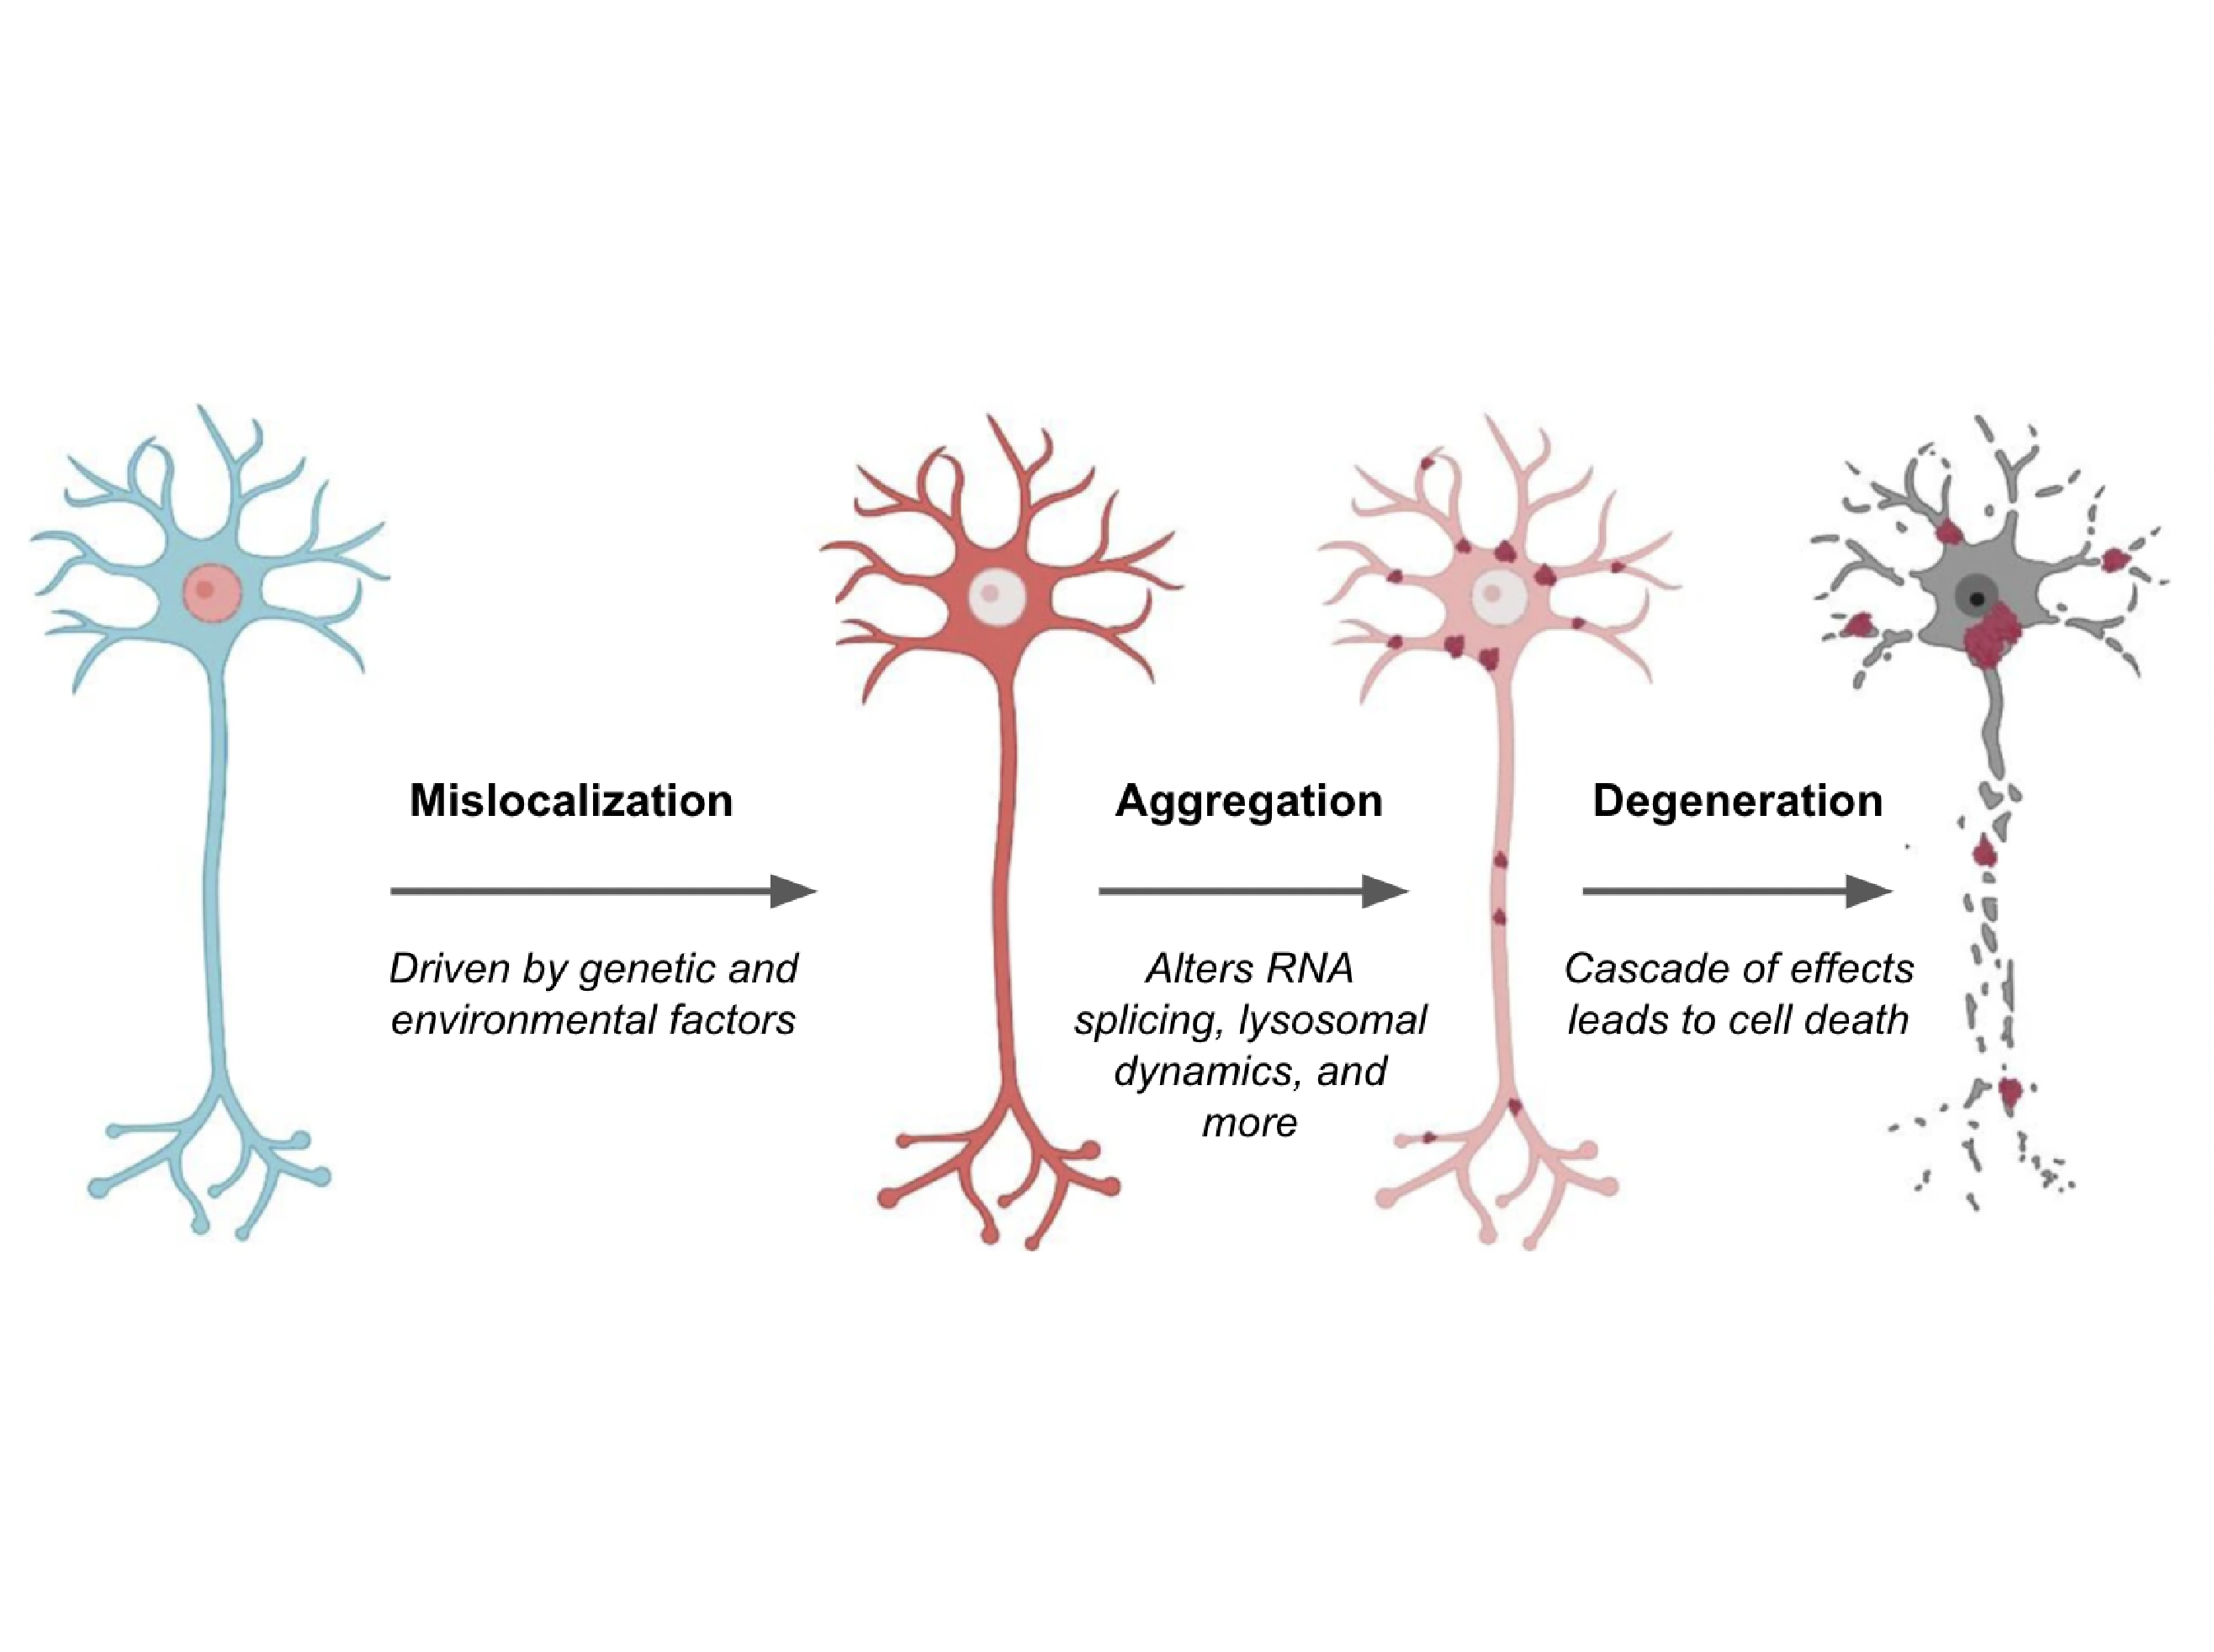 Degenerating neurons